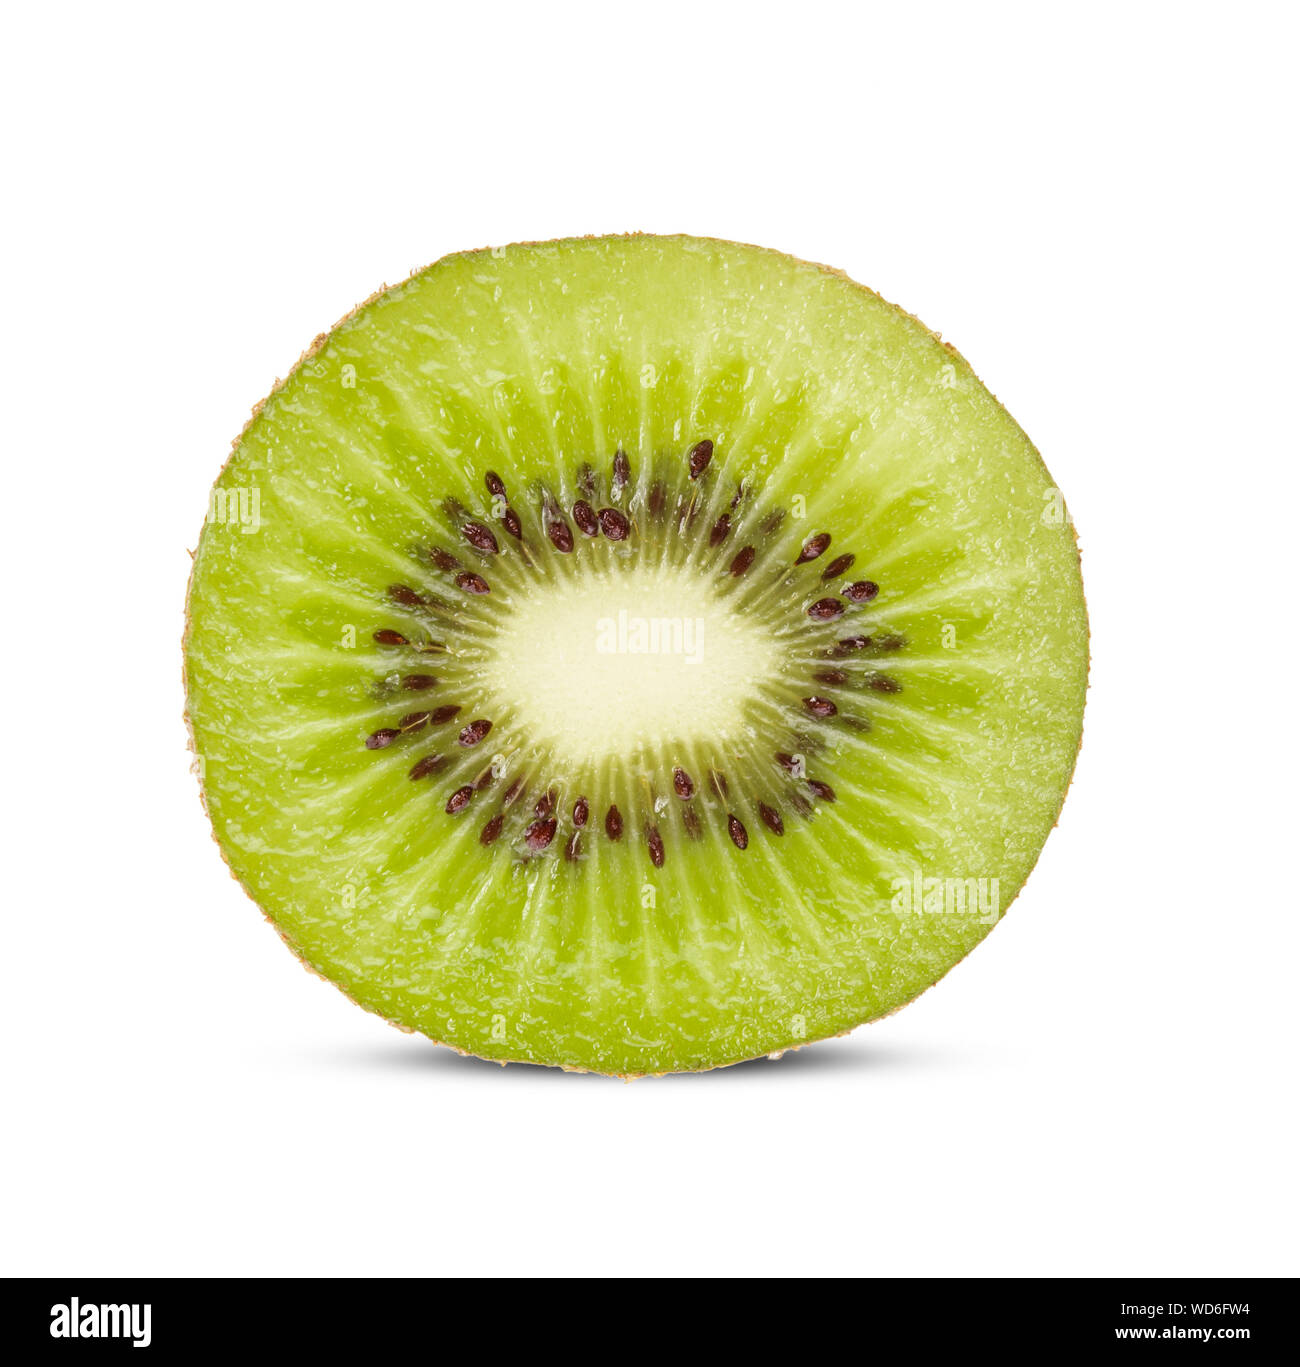 Slices kiwi fruit isolated on white background. full depth of field Stock Photo